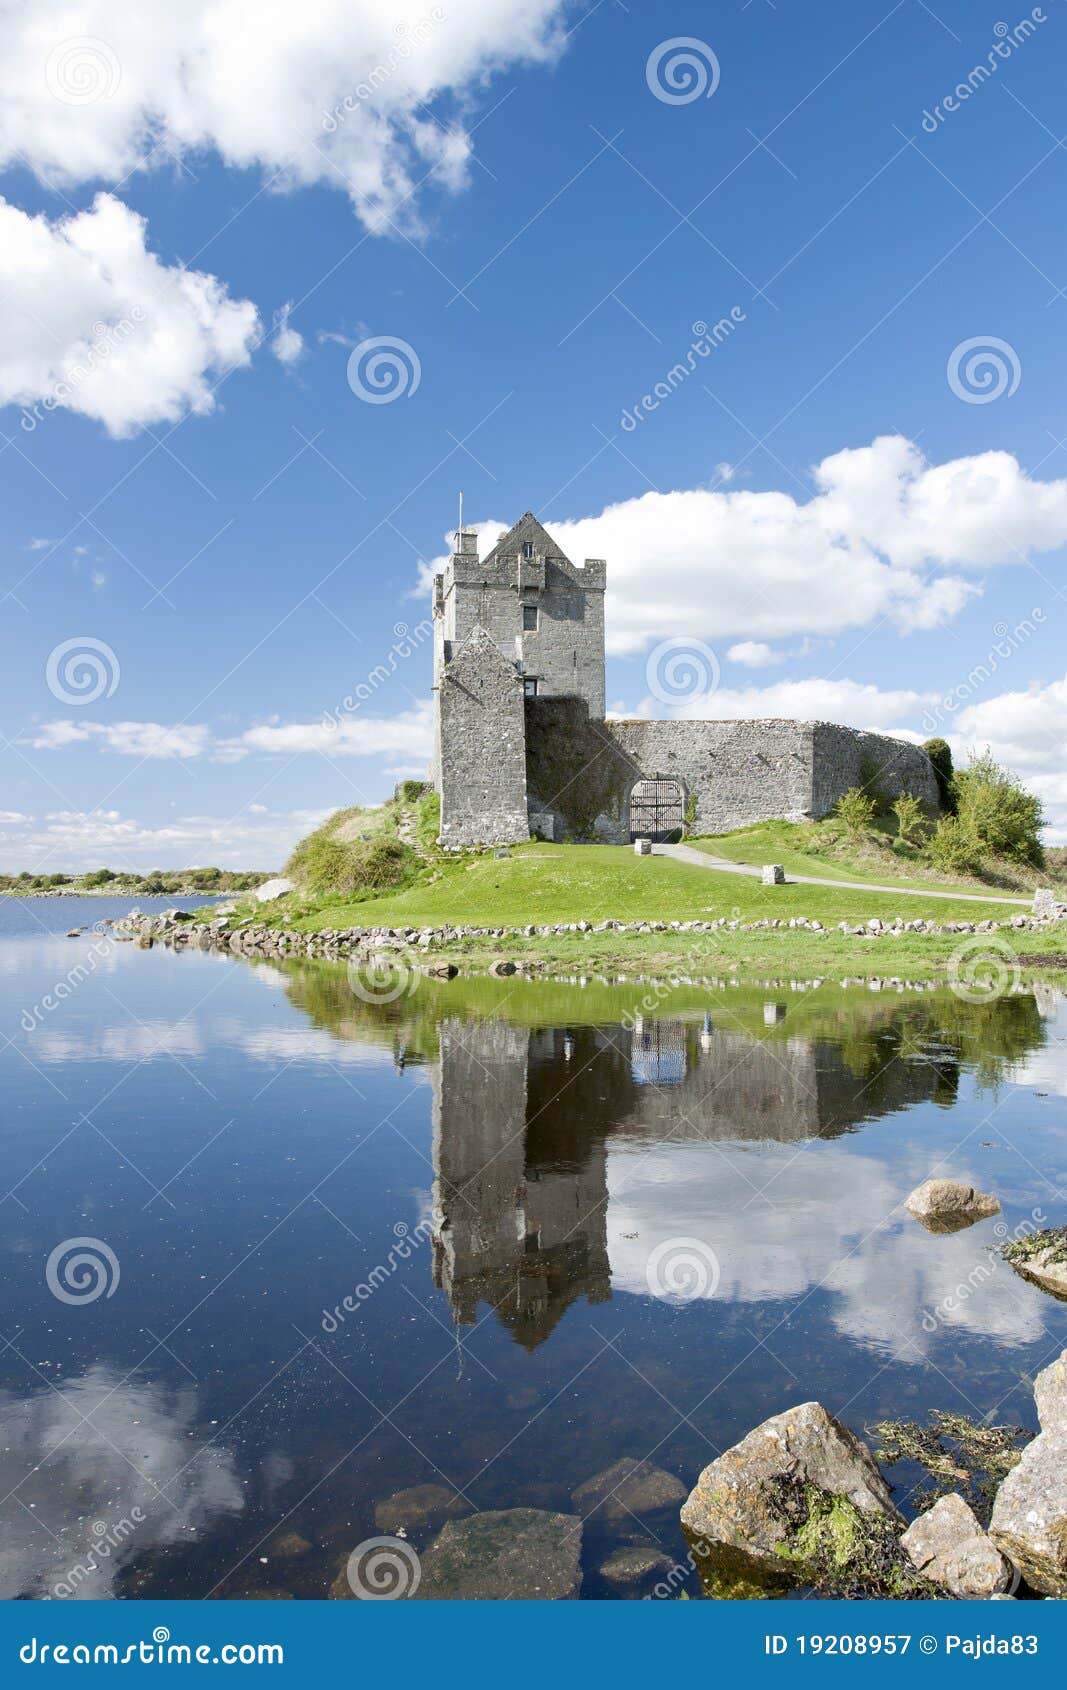 dunguaire castle in kinvara, ireland.